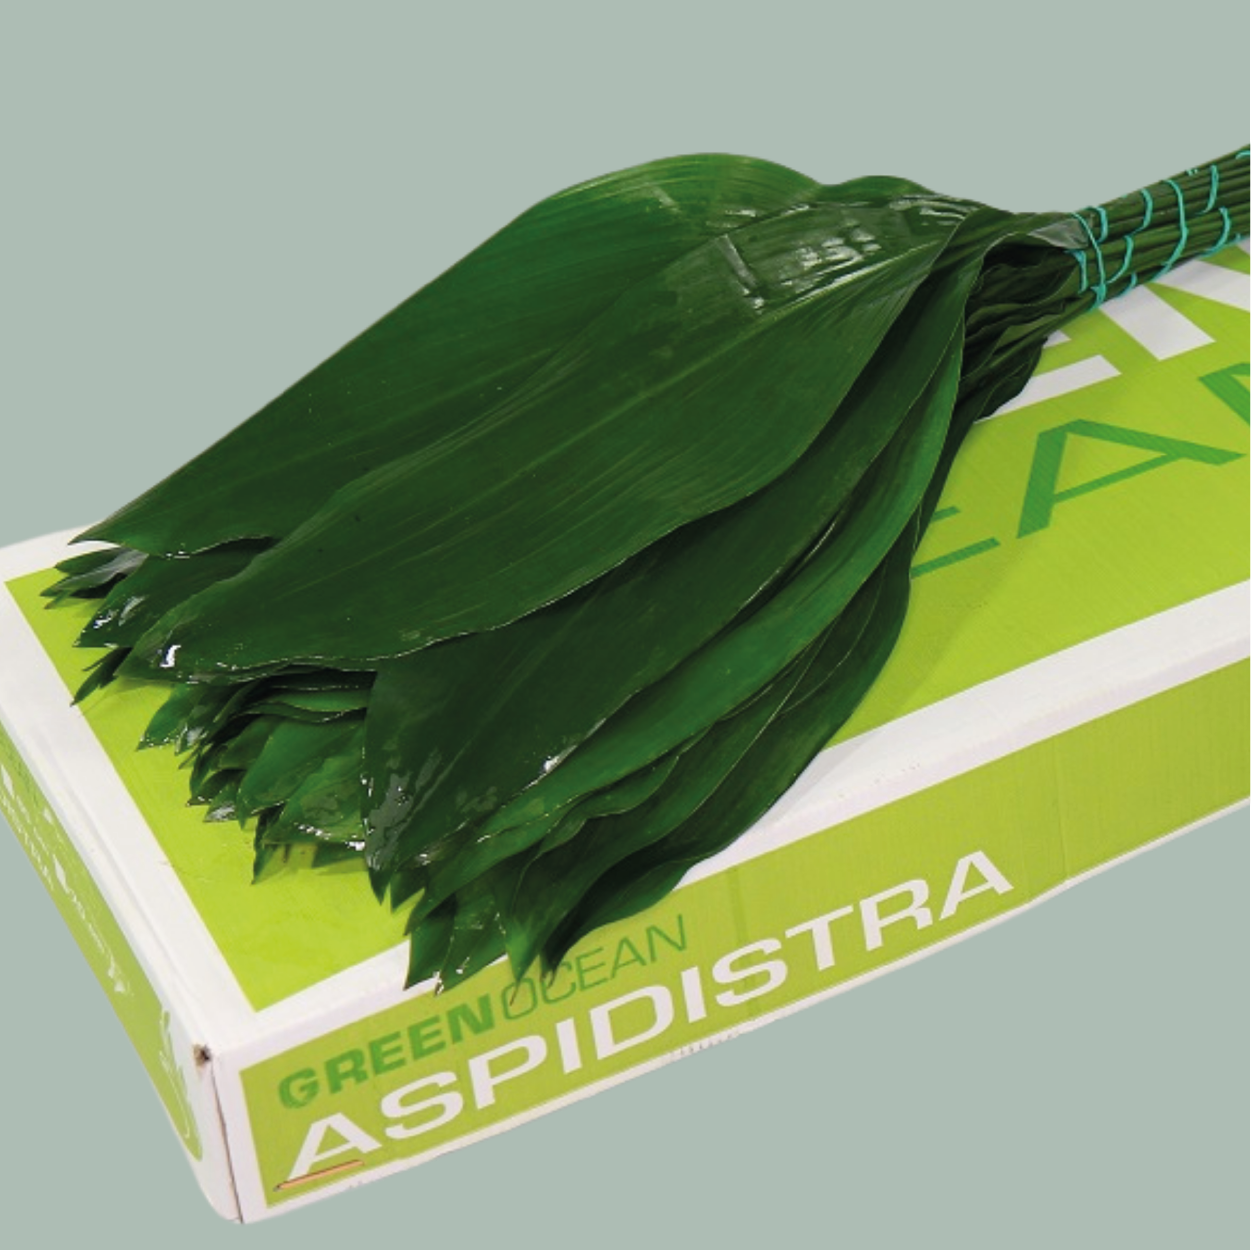 Dec Aspidistra Leaf (80cm)